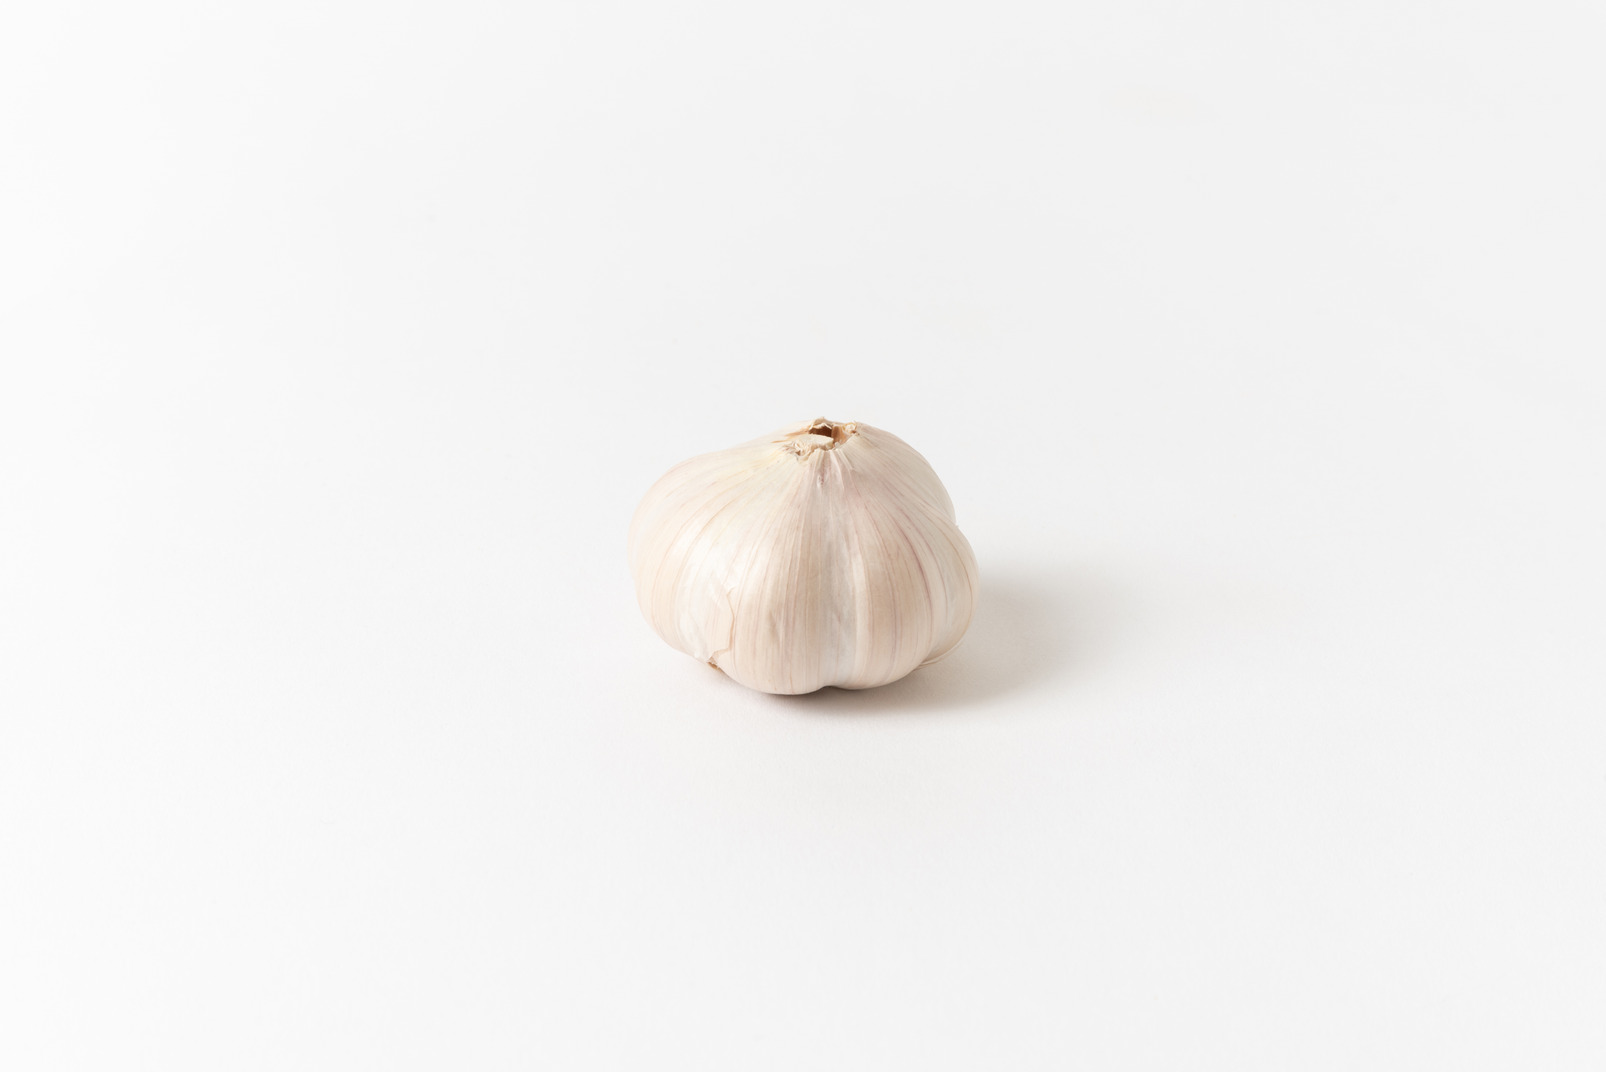 Garlic bulb on a white background